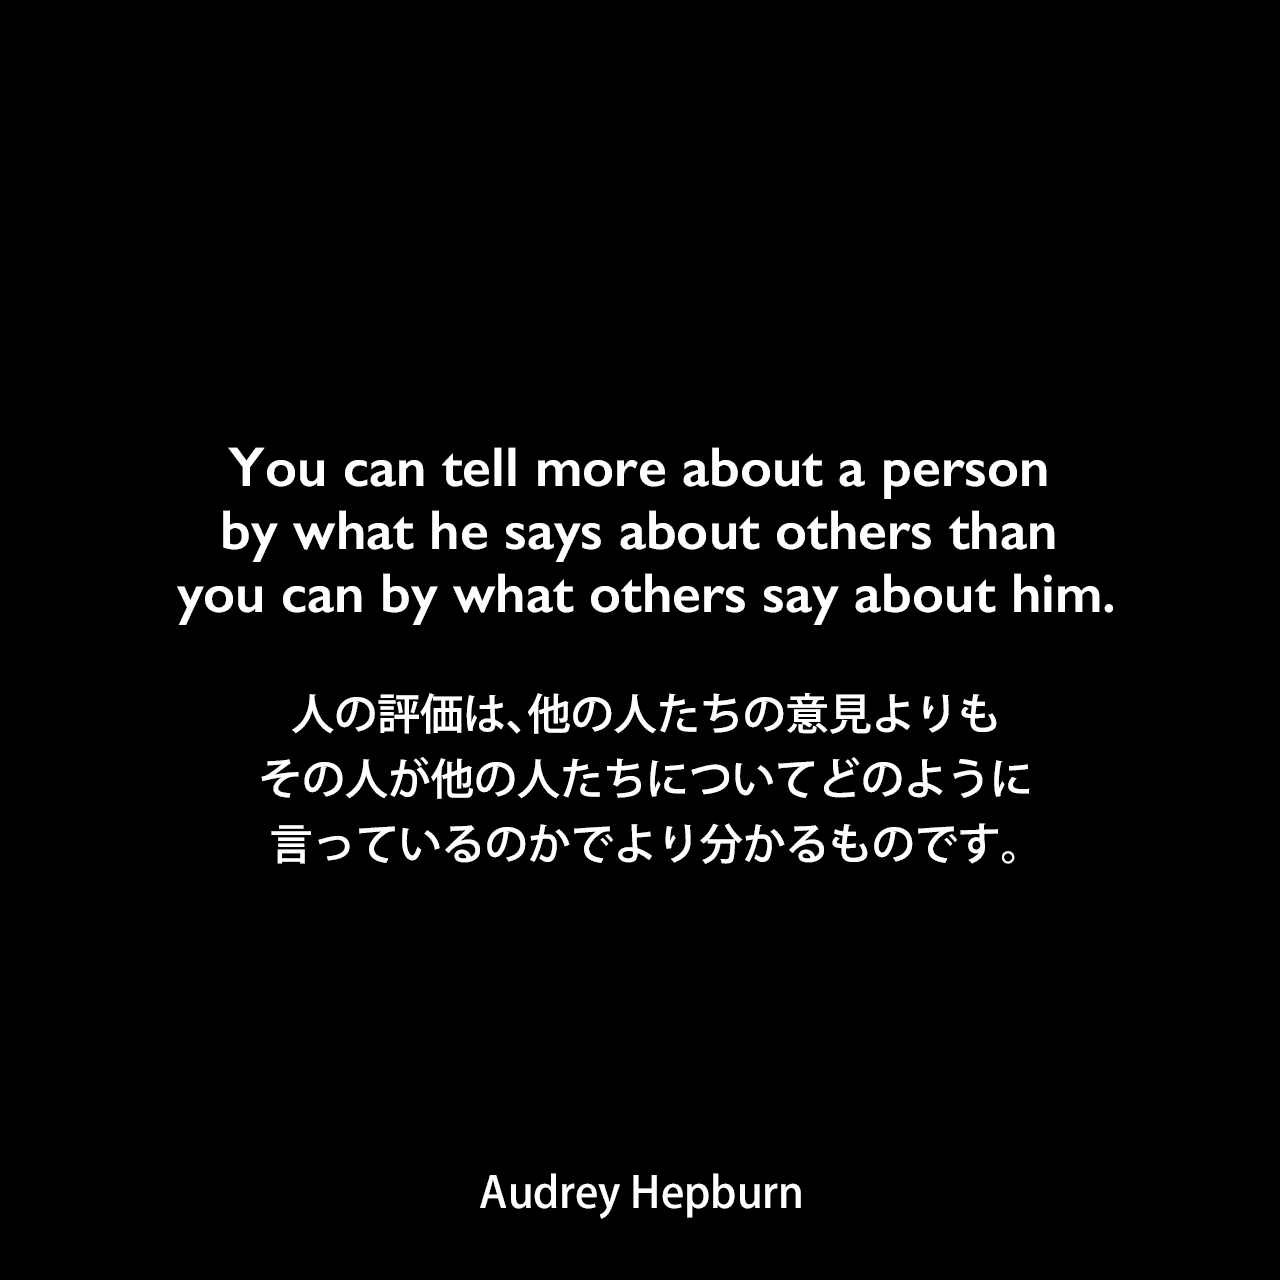 You can tell more about a person by what he says about others than you can by what others say about him.人の評価は、他の人たちの意見よりも、その人が他の人たちについてどのように言っているのかでより分かるものです。Audrey Hepburn